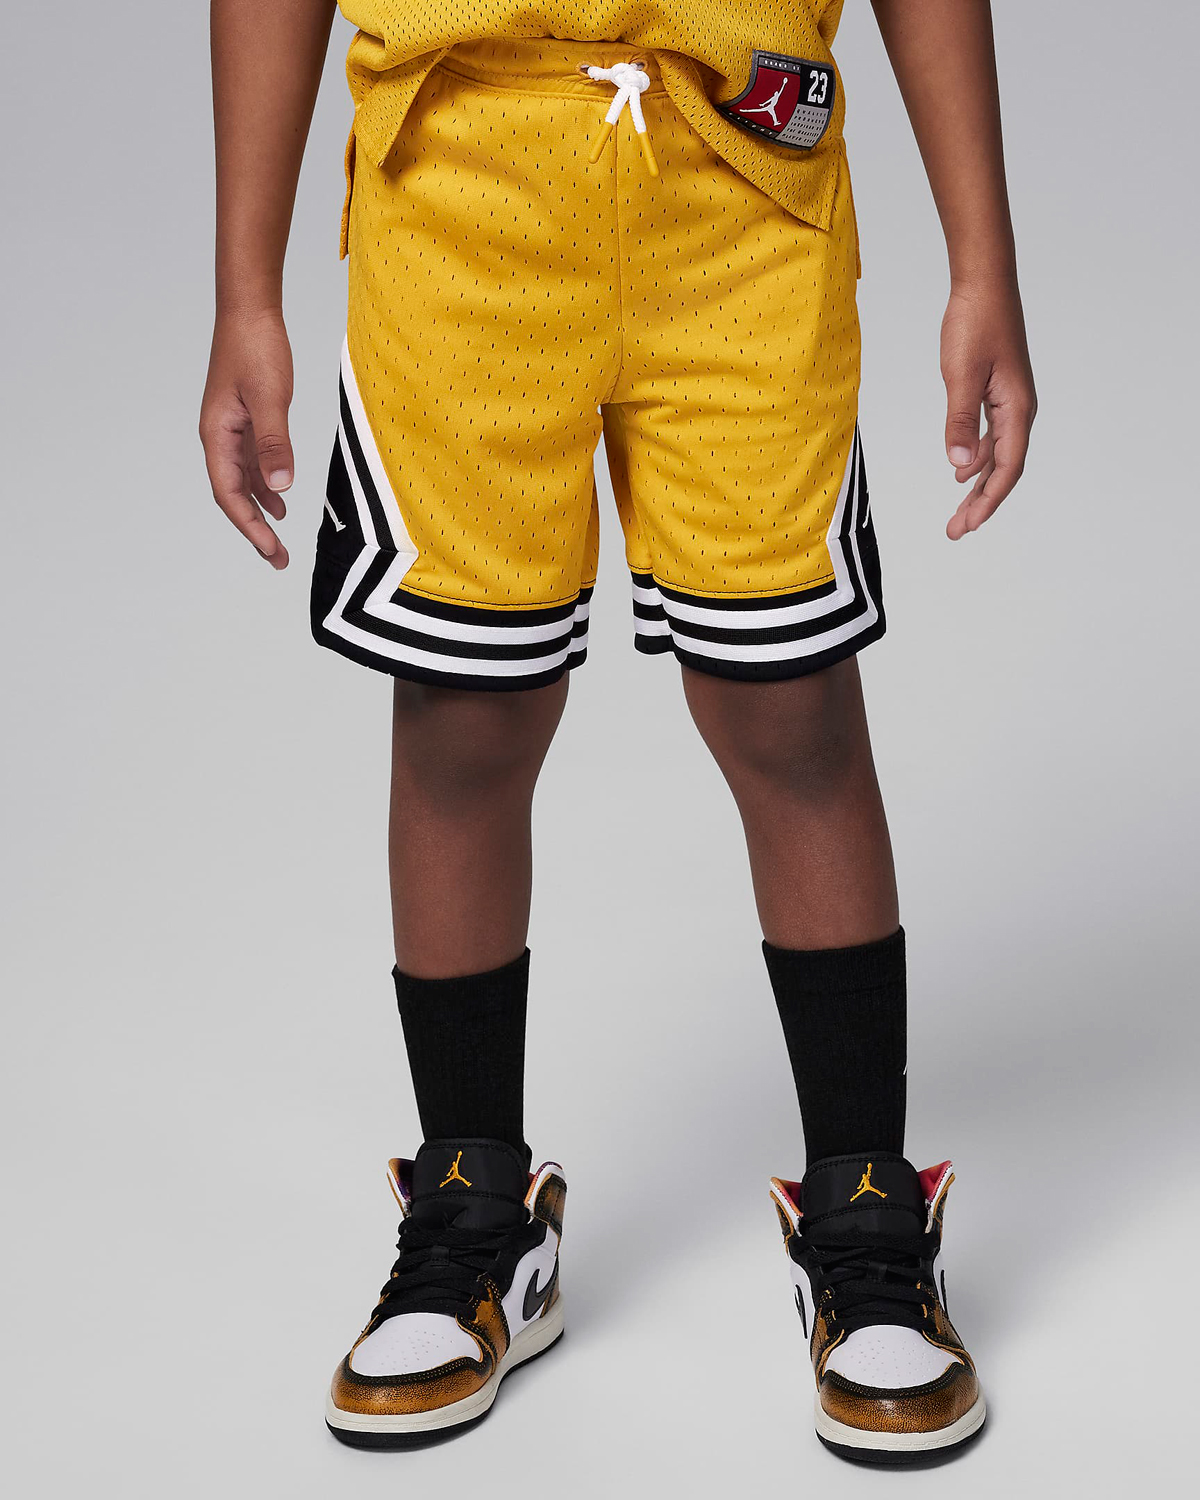 Jordan-Little-Kids-Mesh-Shorts-Yellow-Ochre-Preschool